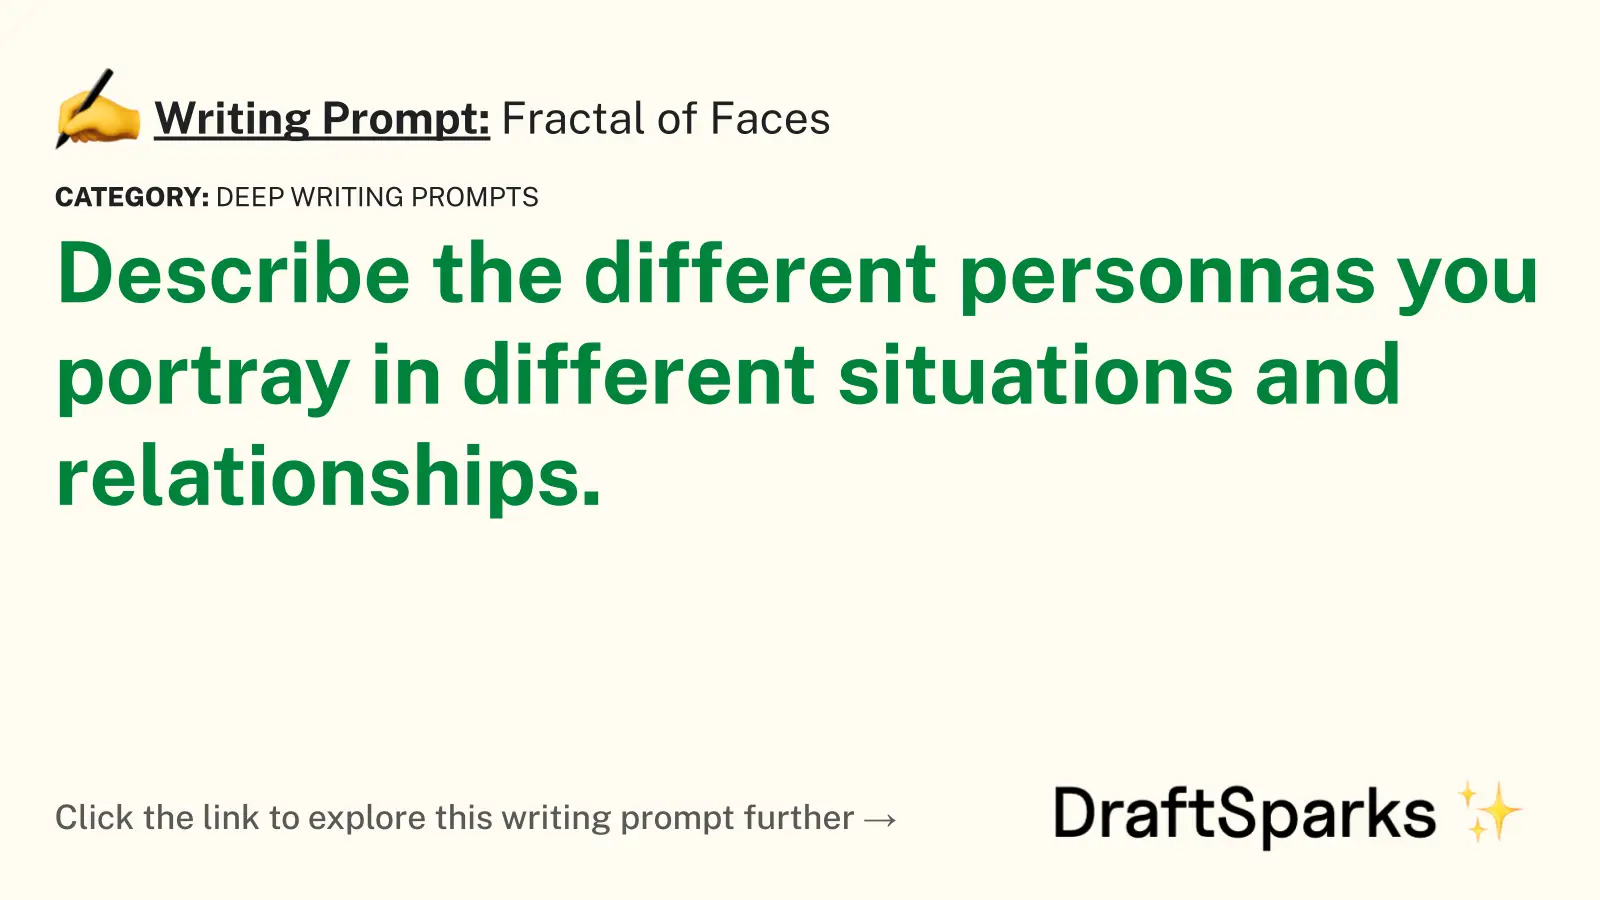 Fractal of Faces